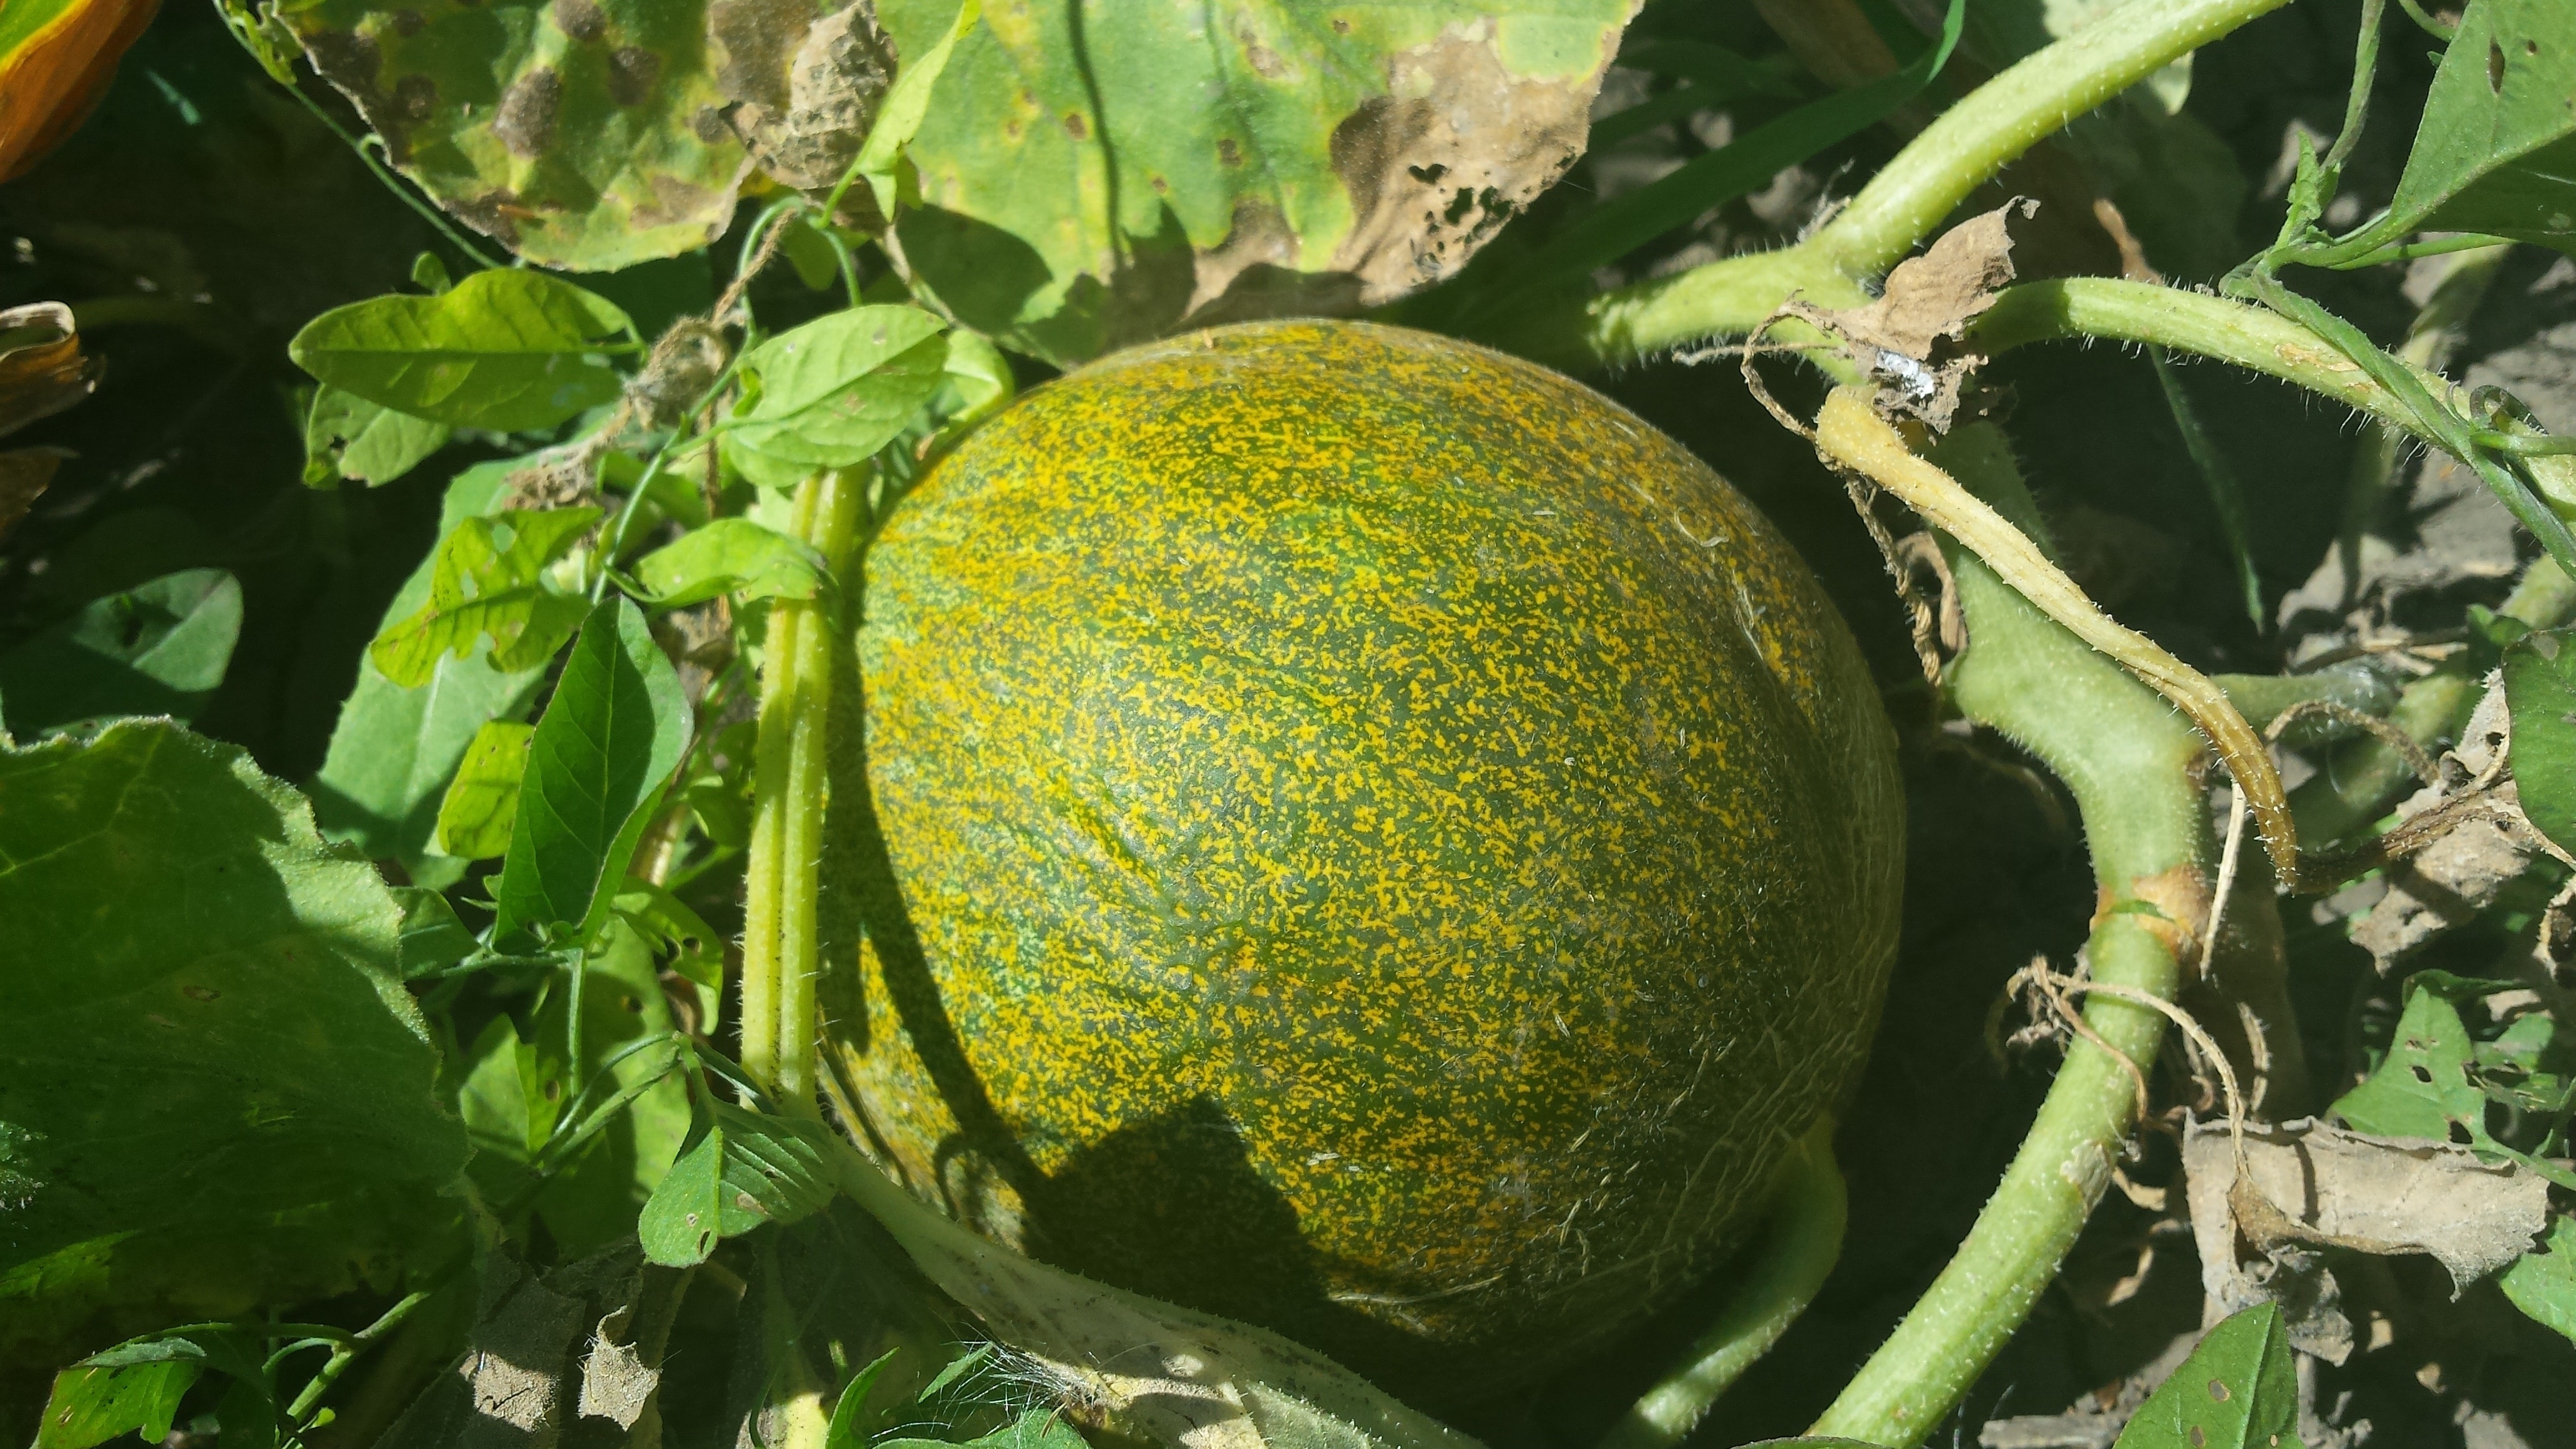 Summer, Harvest, Melon, Vegetable Garden, food and drink, healthy eating